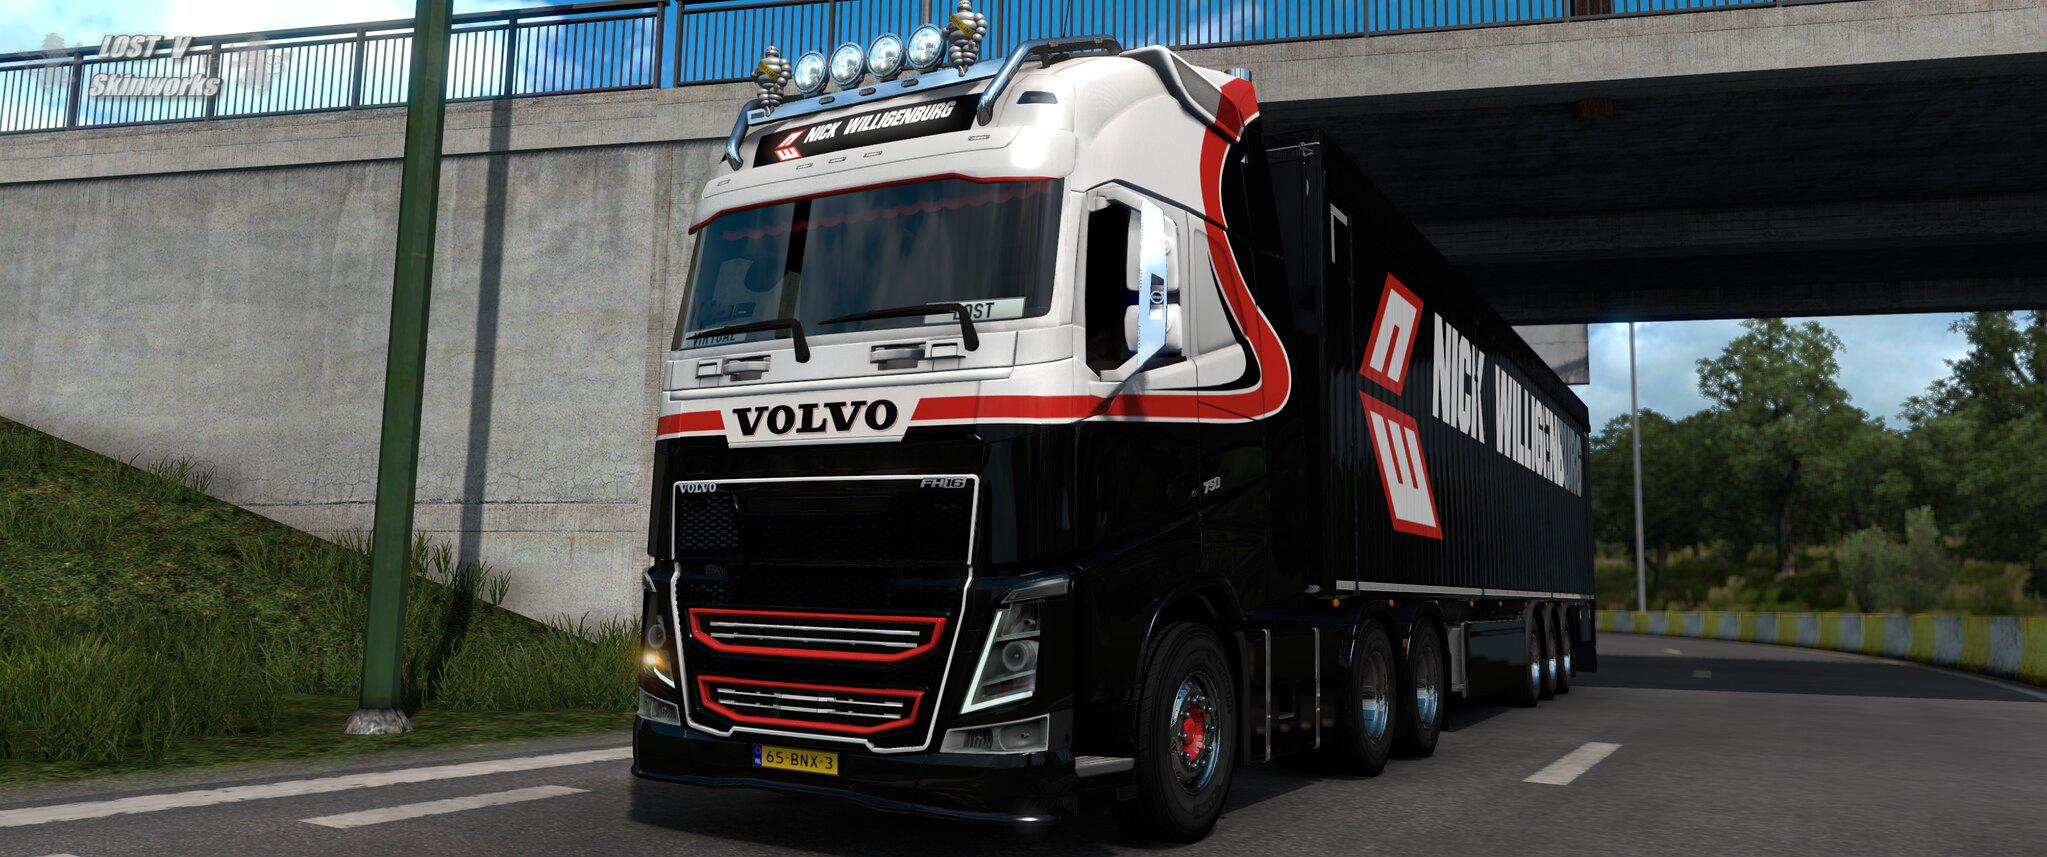 ETS2 - Nick Willigenburg Volvo FH Combo V1.0.1 (1.40.x) | Euro Truck